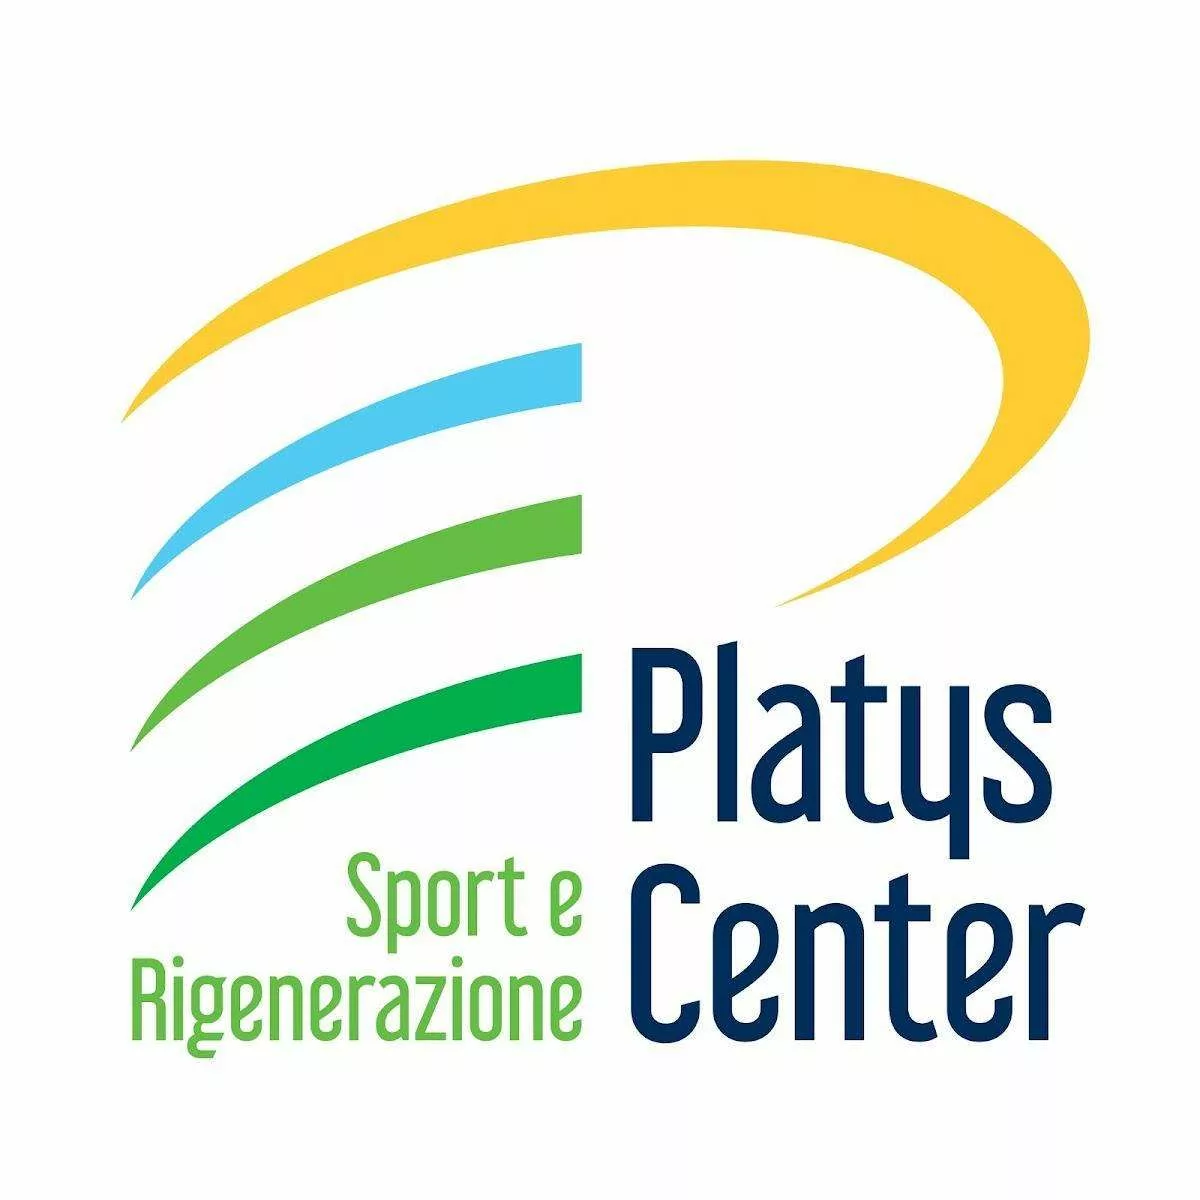 PLATYS Center